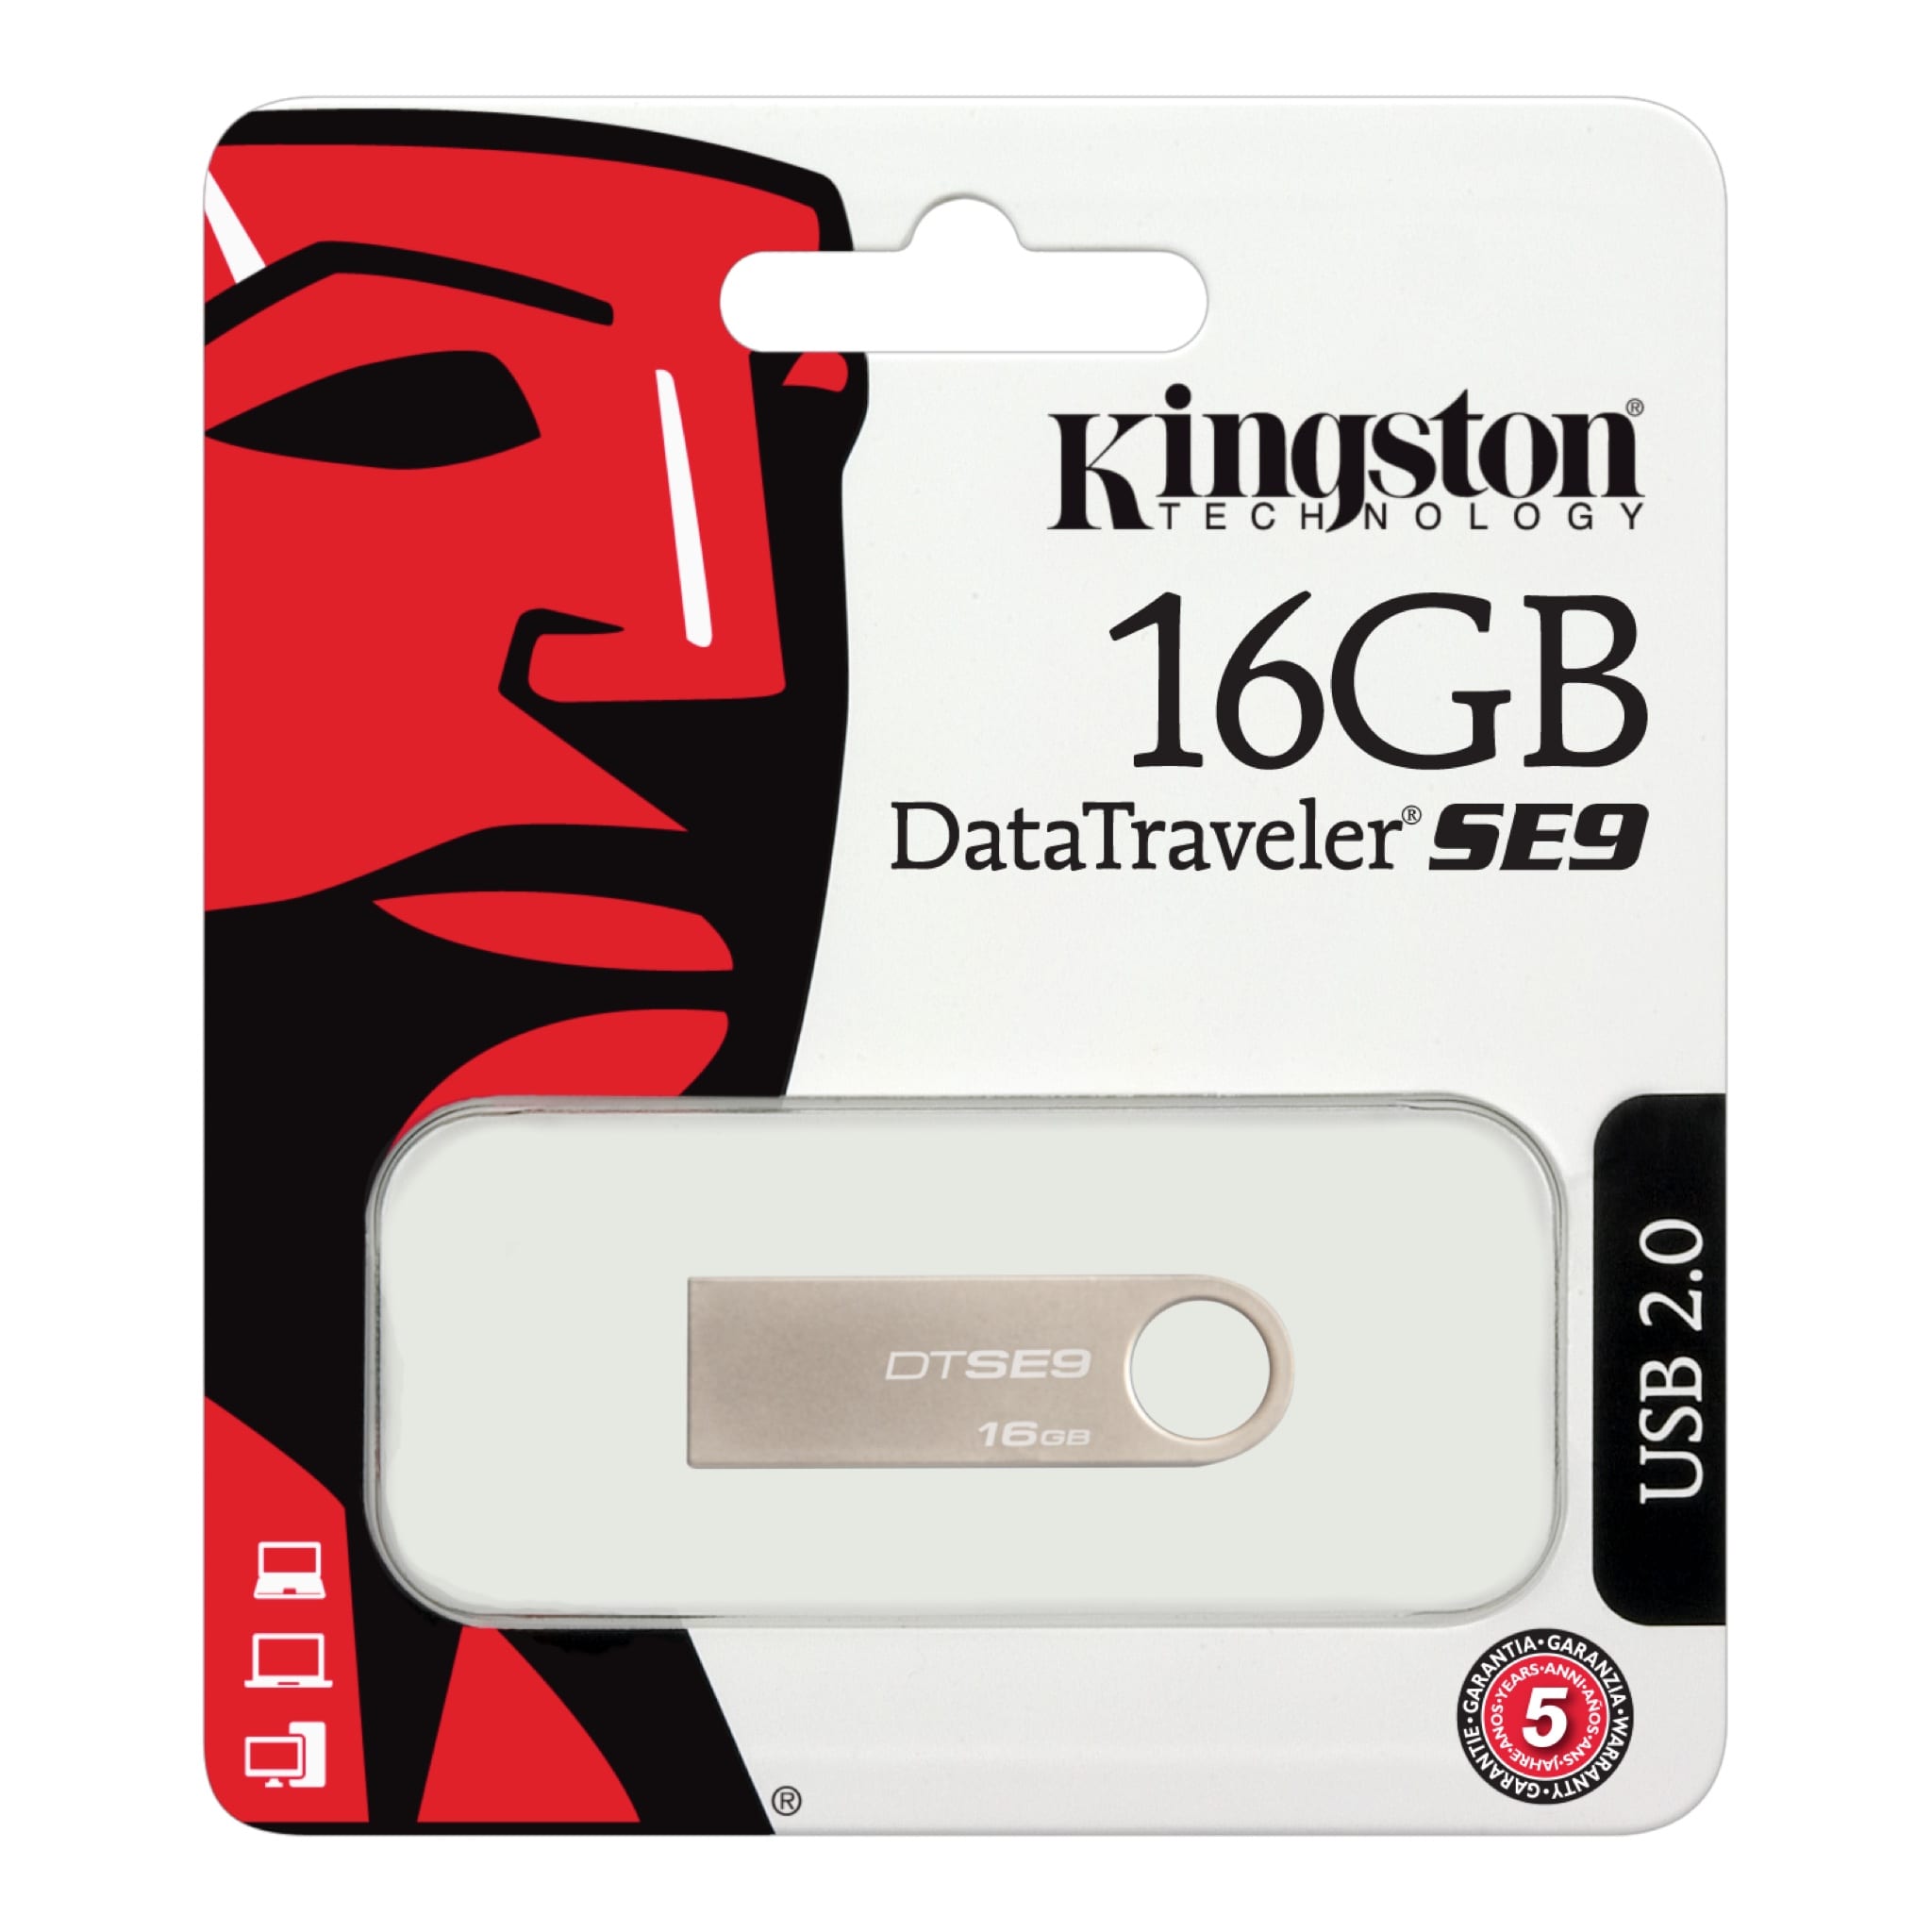 Inactivo Oxidado Sinceramente Memorias Usb KINGSTON 16GB DataTraveler SE9 - Globatec SRL